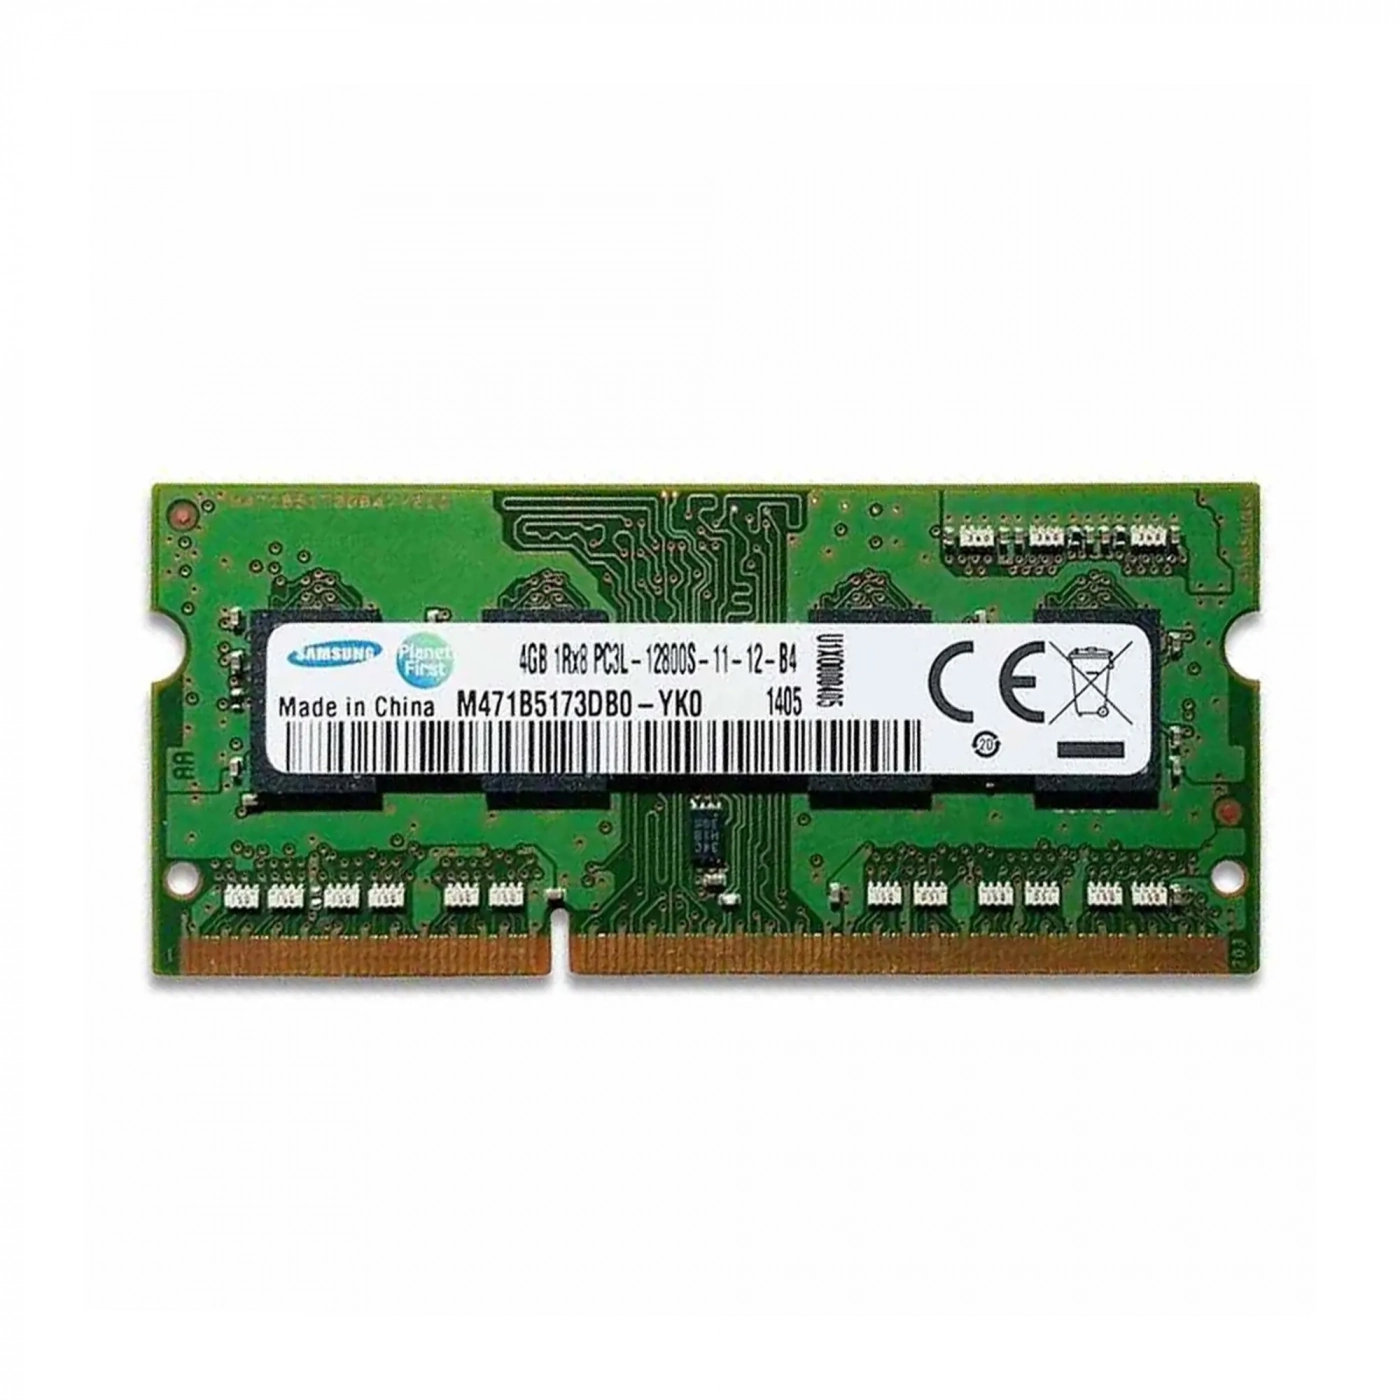 Купить Модуль памяти Samsung DDR3L-1600 SODIMM 4GB (M471B5173EB0-YK0) - фото 1